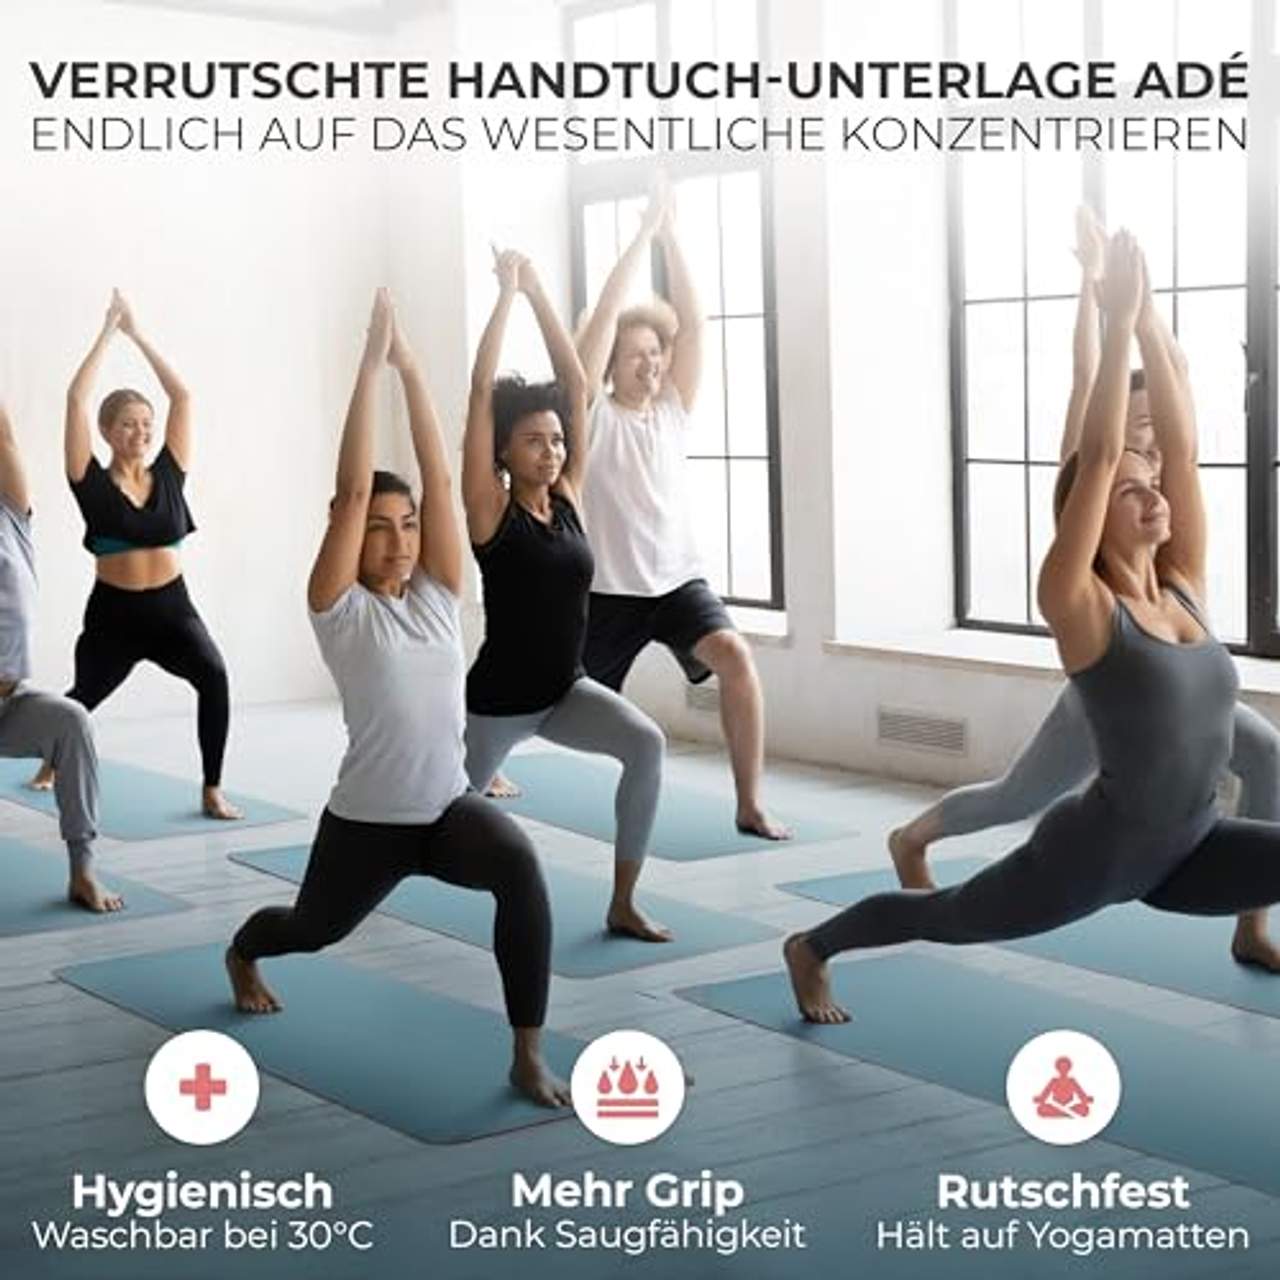 NirvanaShape Yoga Handtuch rutschfest